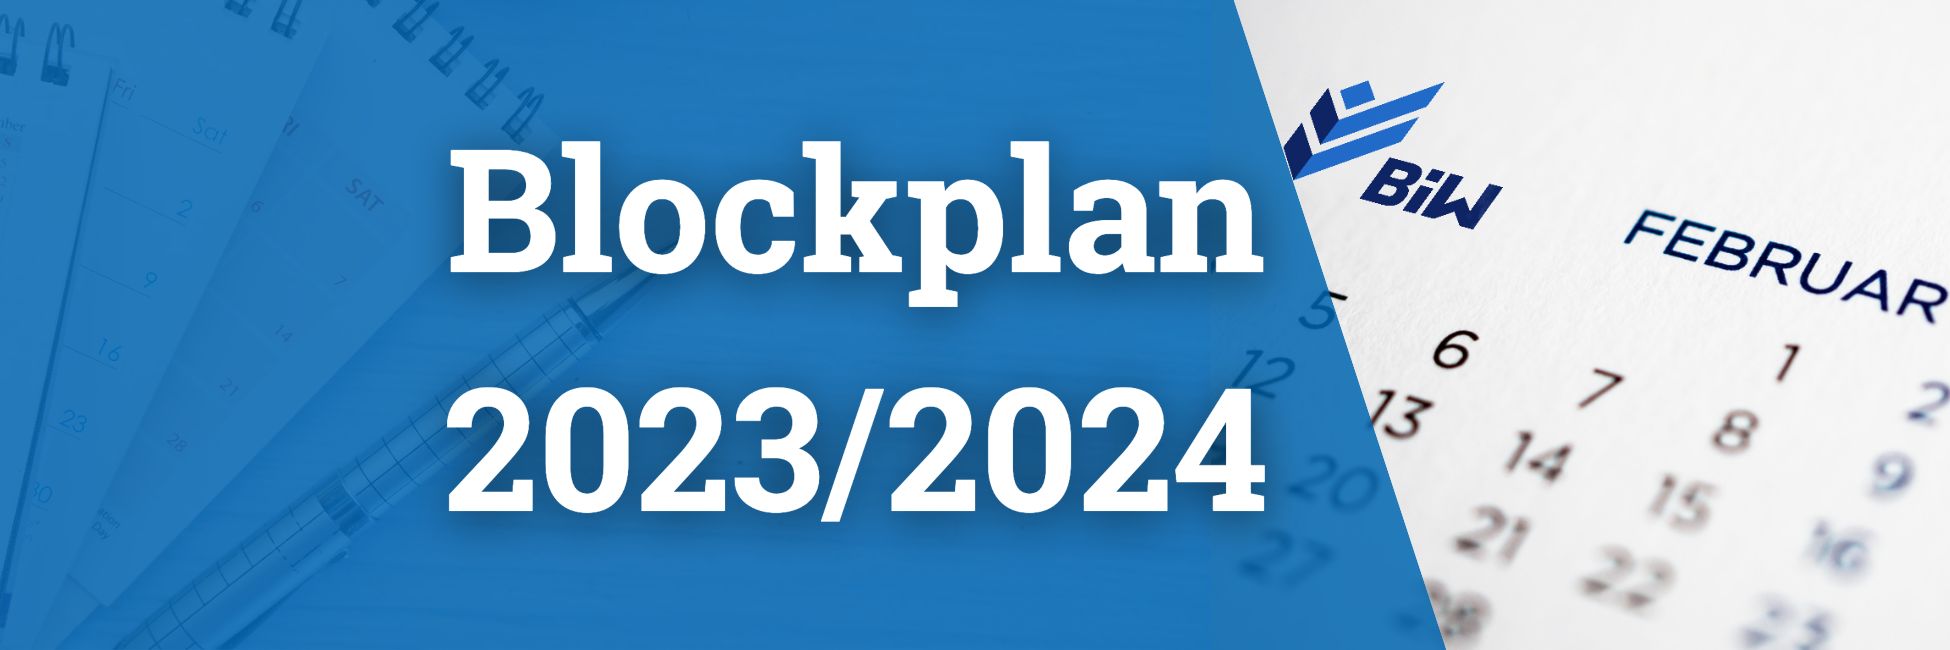 Blockplan 2023 2024